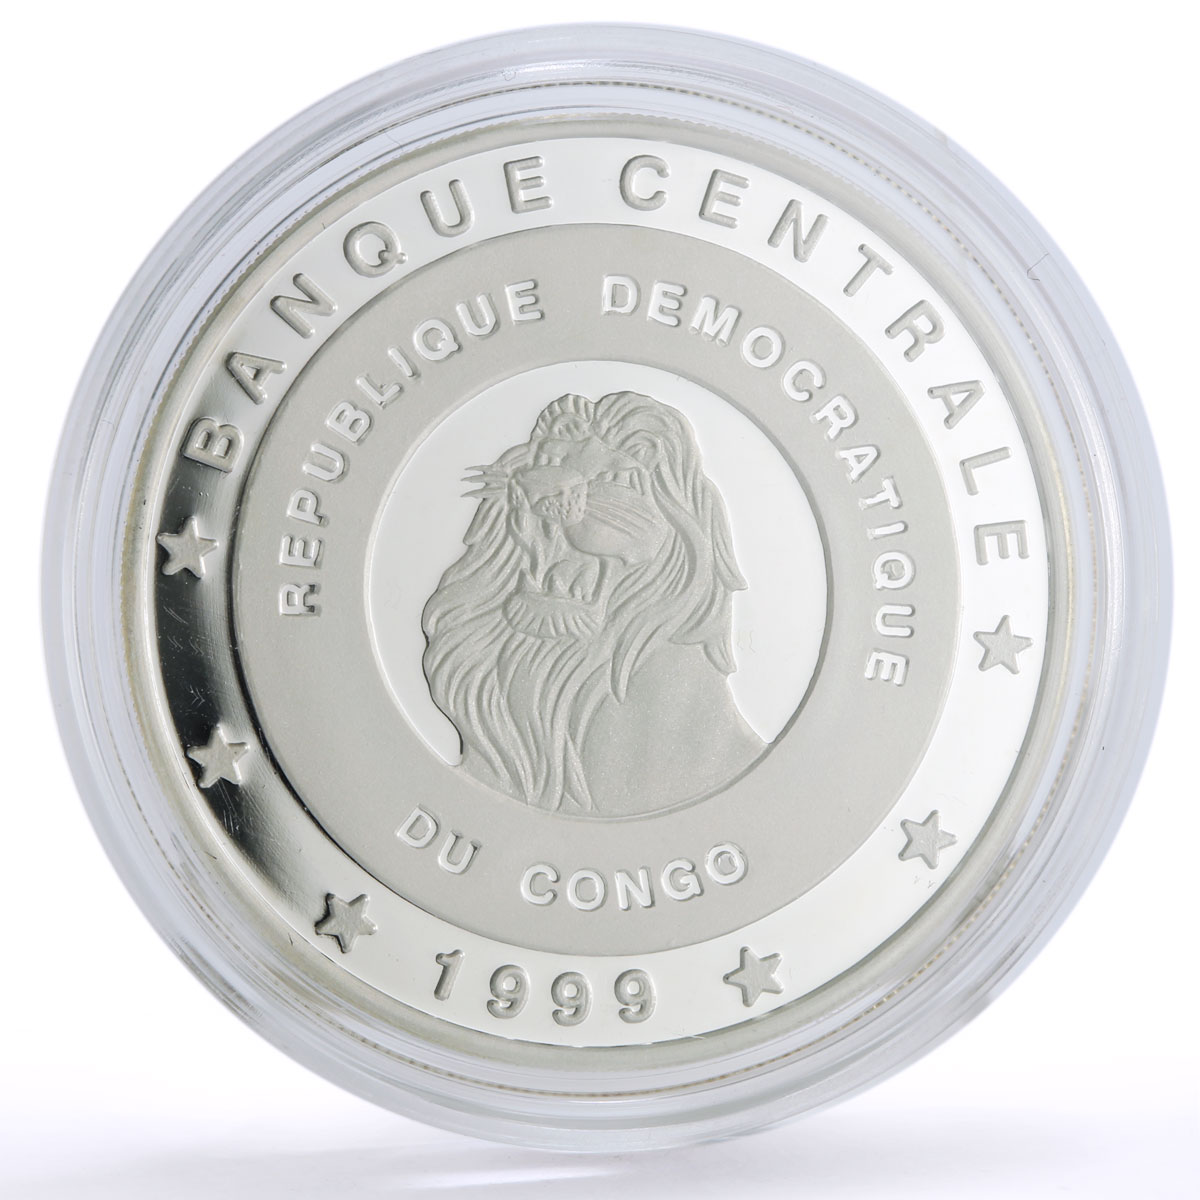 Congo 10 francs Conservation Wildlife Armadillo Fauna proof silver coin 1999